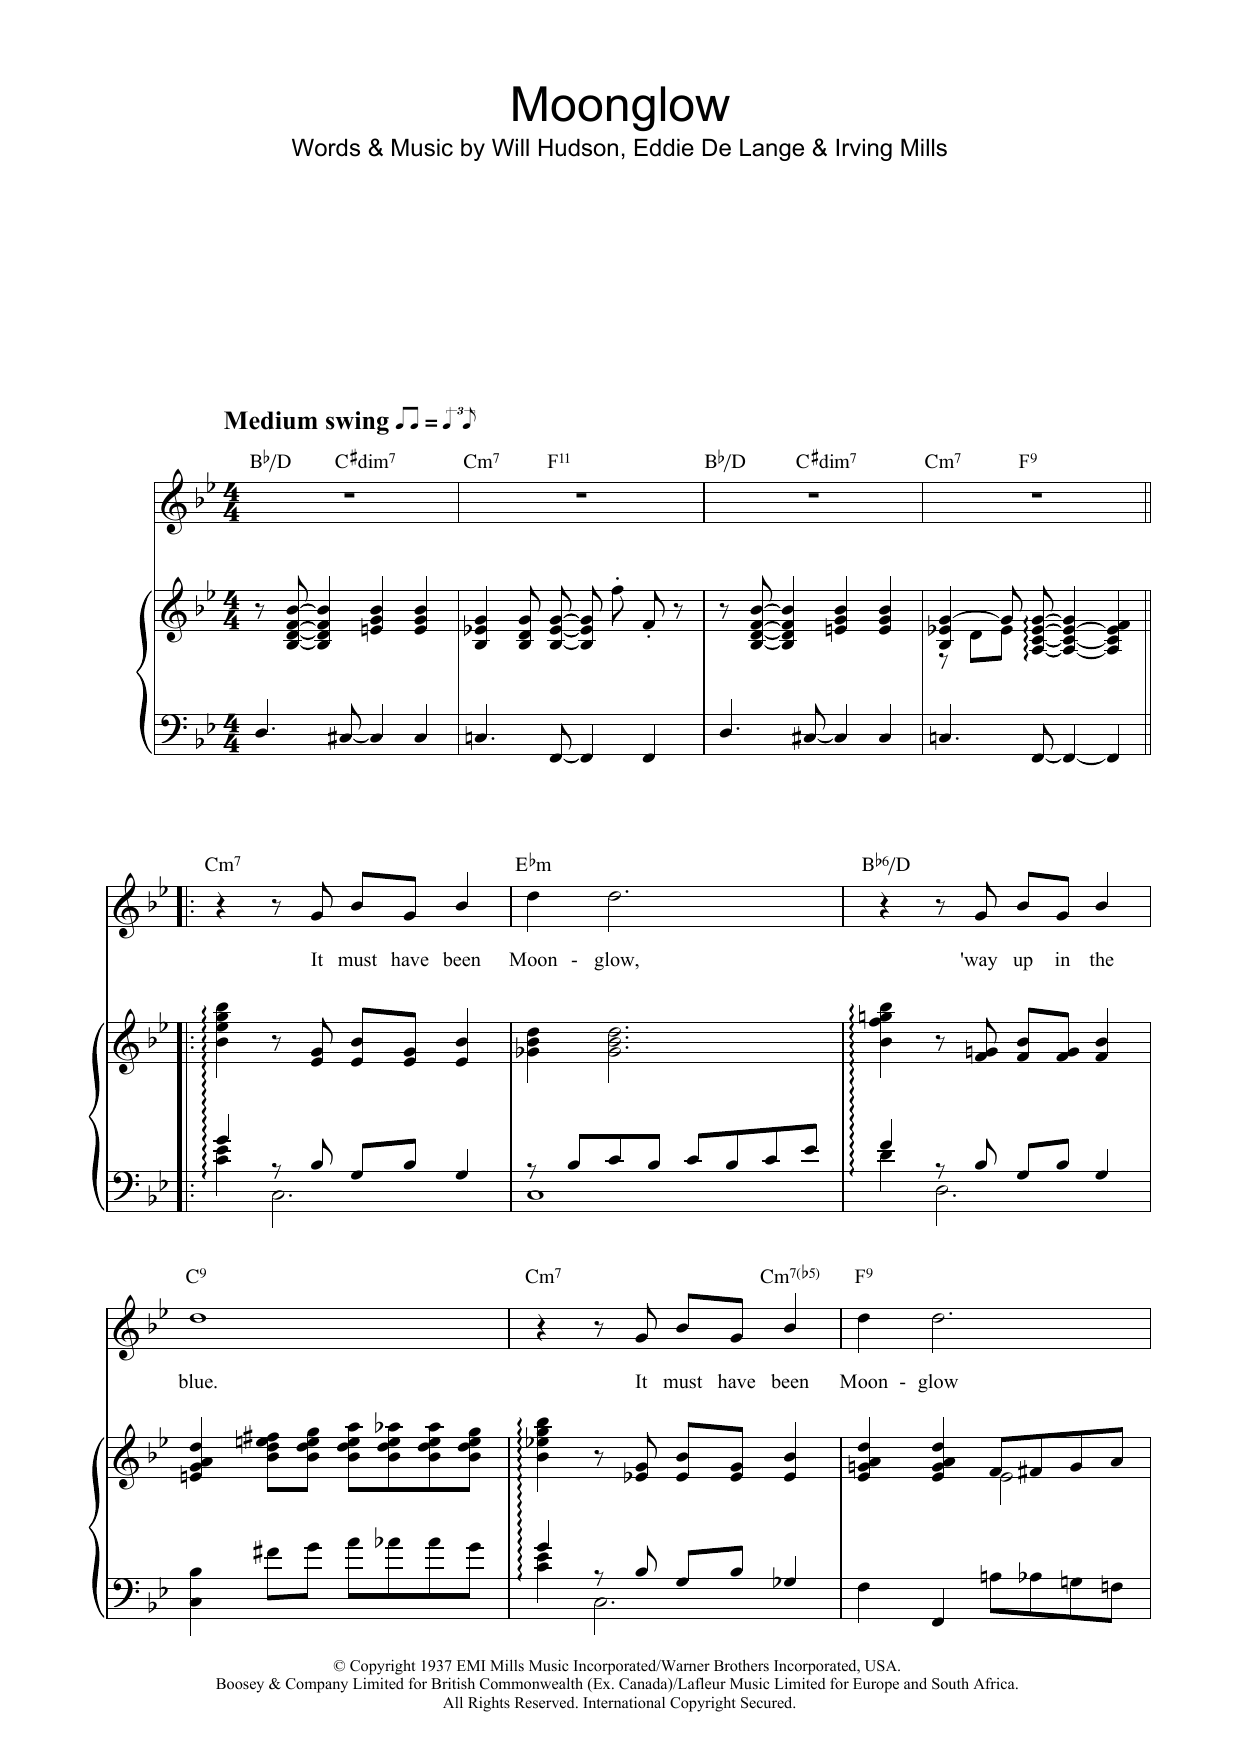 Irving Mills Moonglow Sheet Music Notes & Chords for Organ - Download or Print PDF